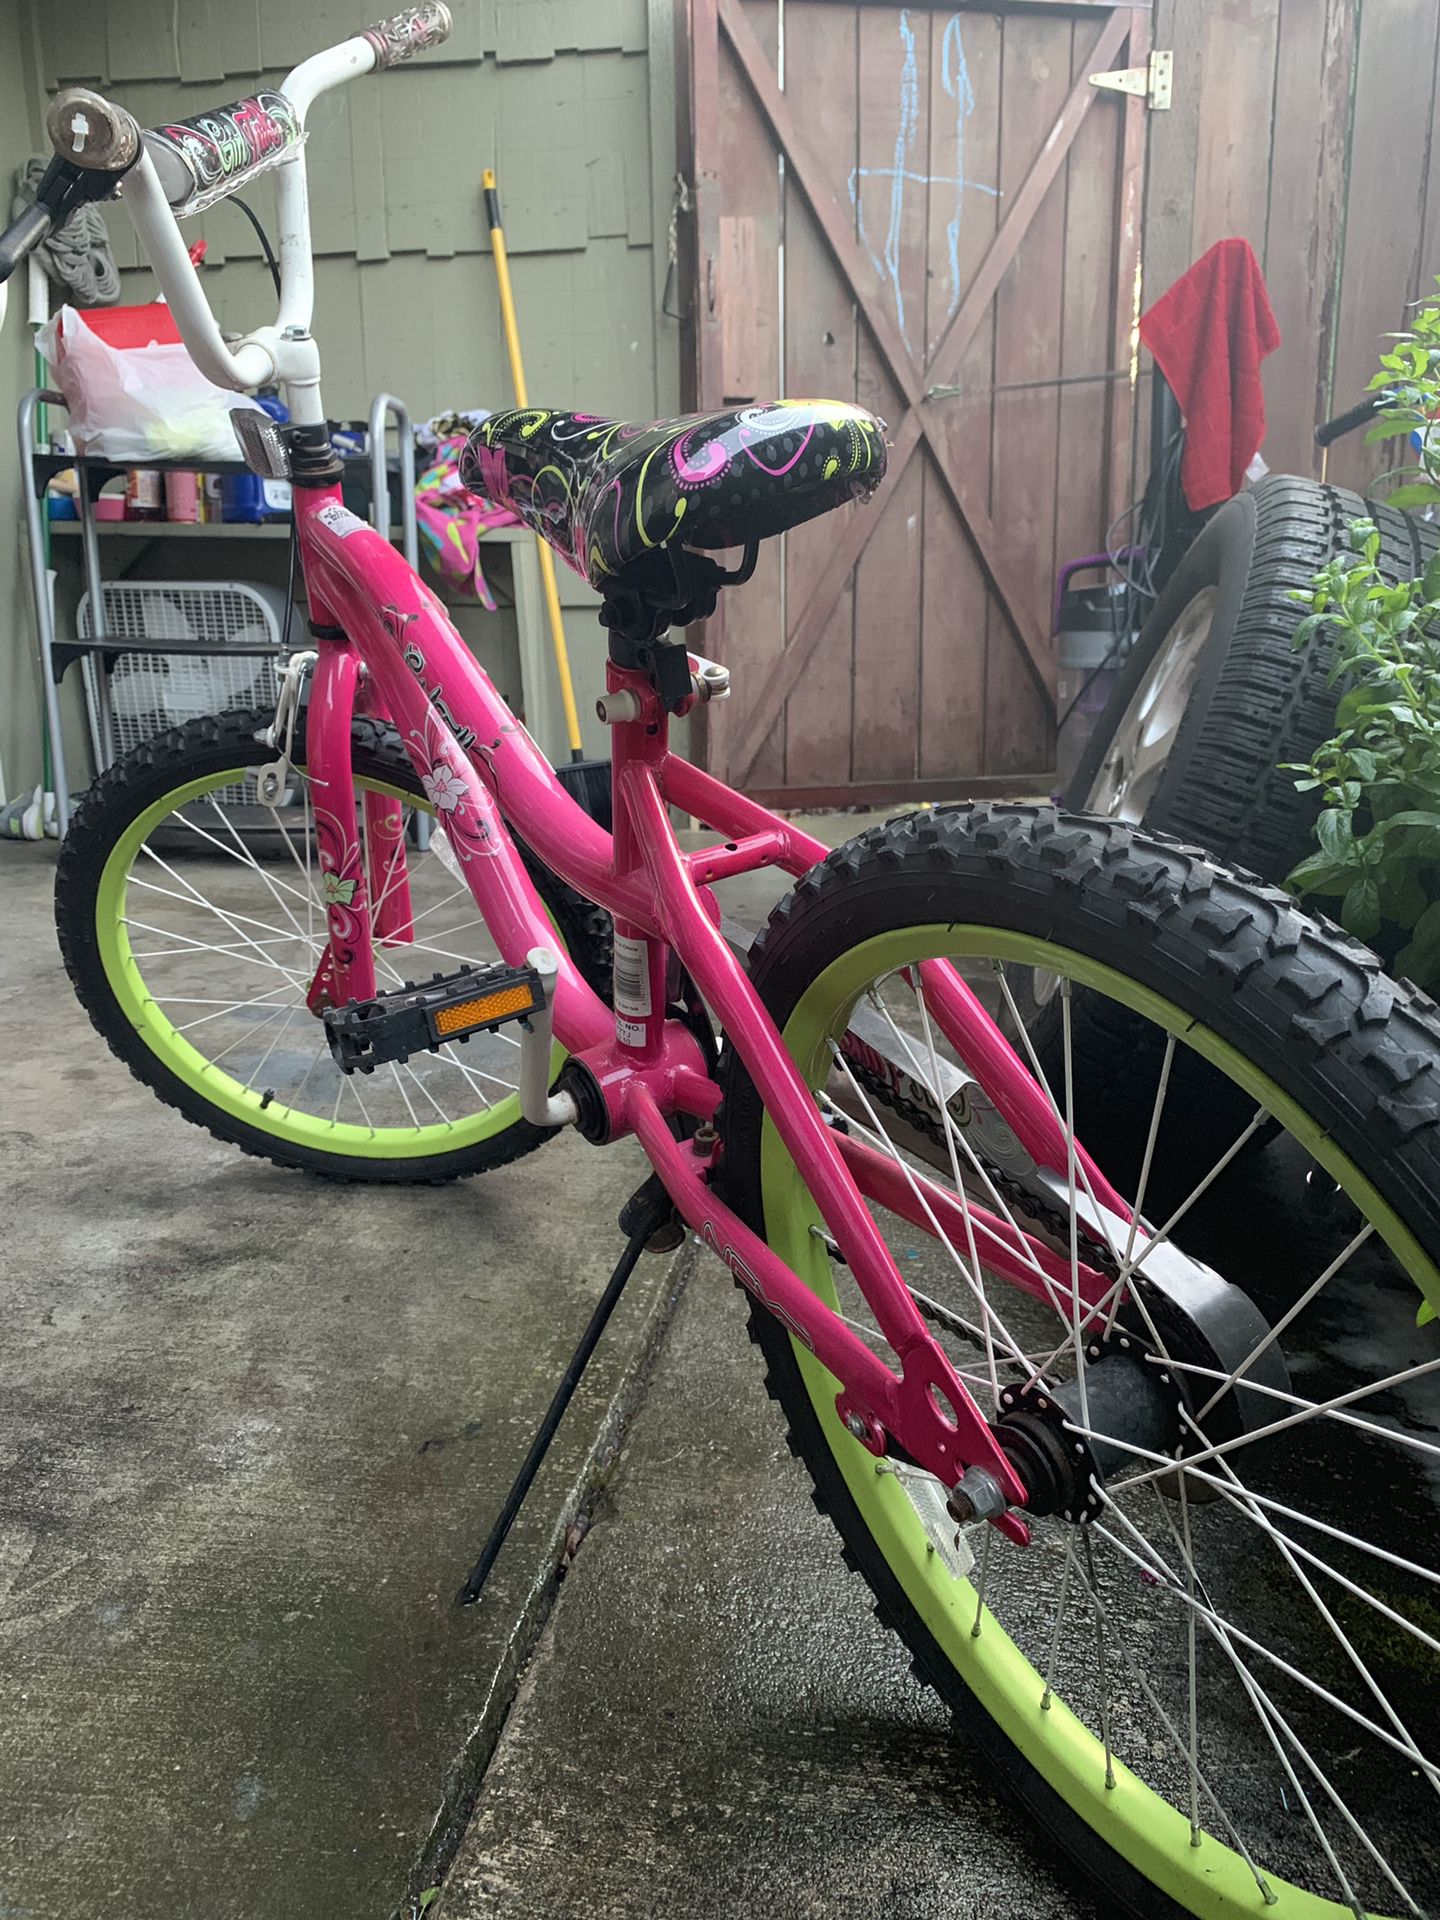 16 inch girl bike